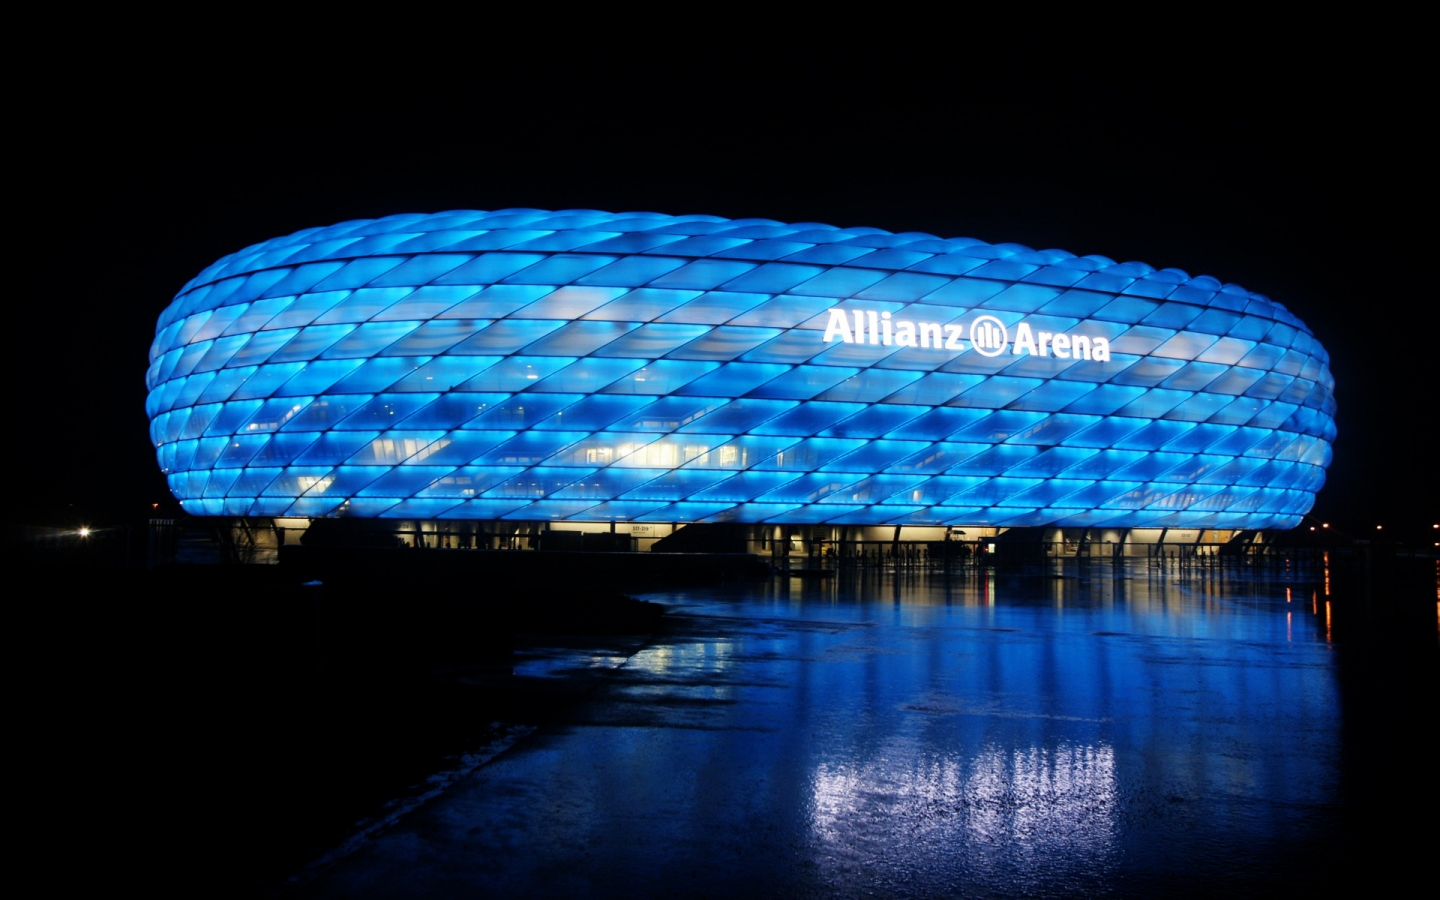 The Allianz Arena Munich for 1440 x 900 widescreen resolution